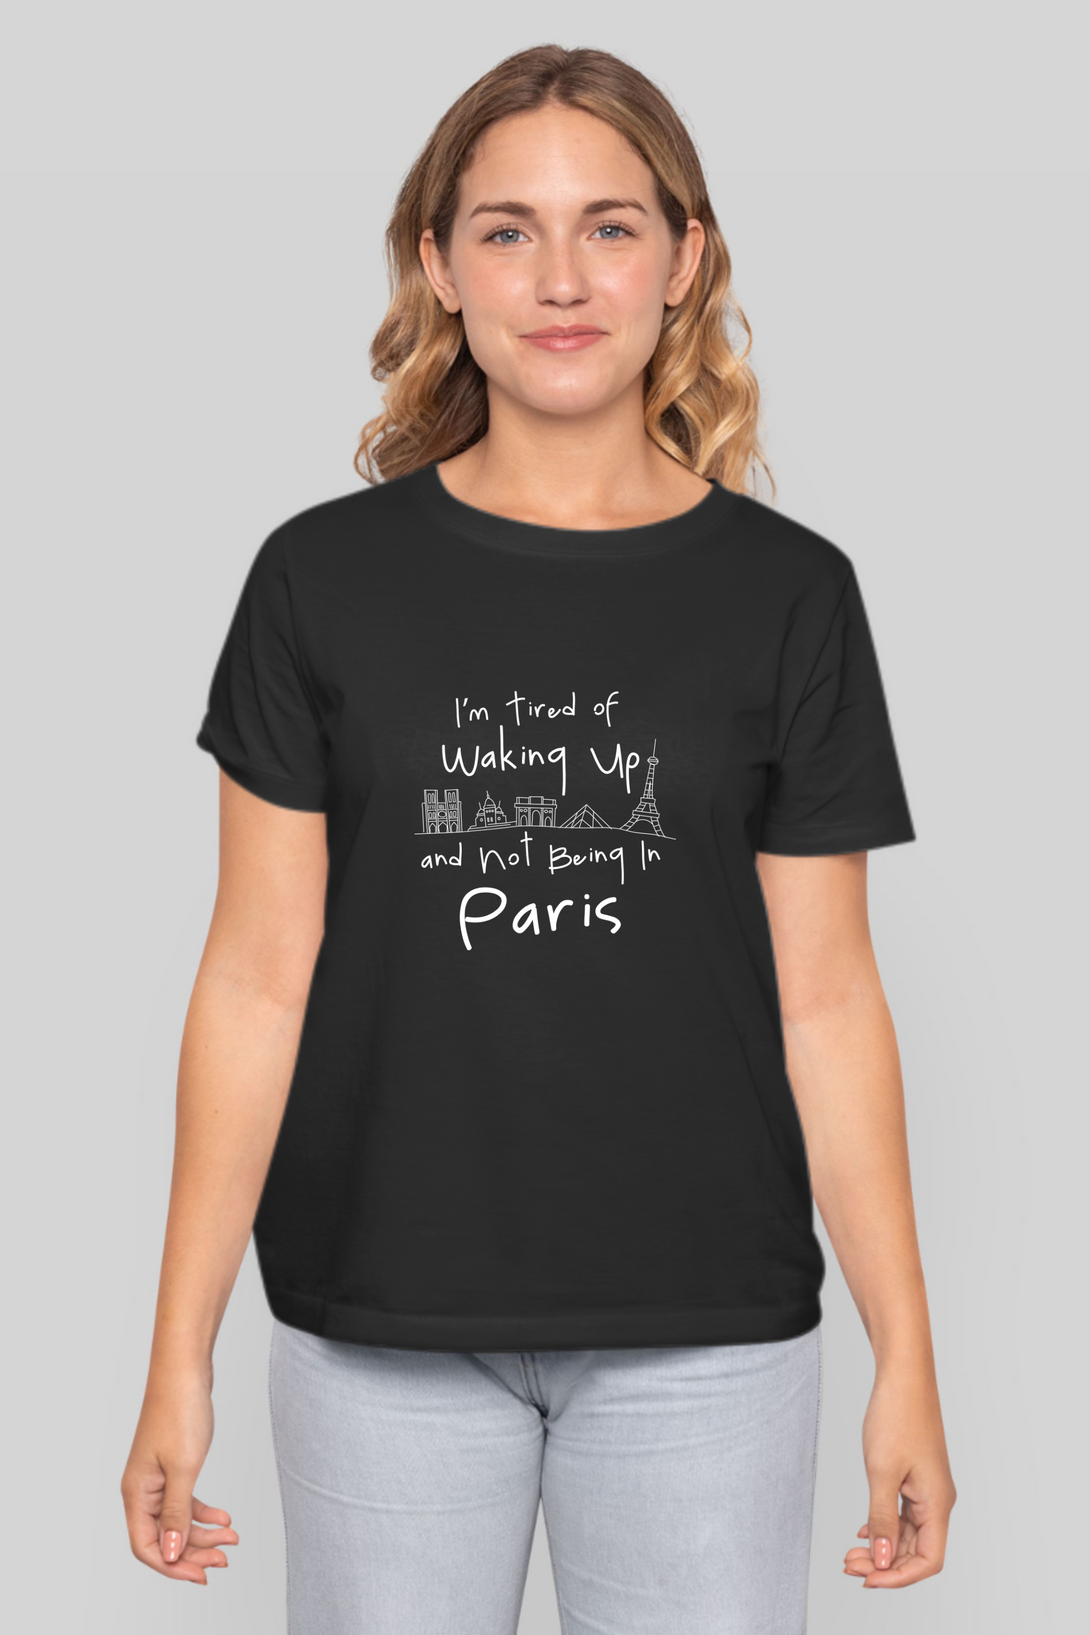 Paris Dreaming Printed T-Shirt For Women - WowWaves - 9